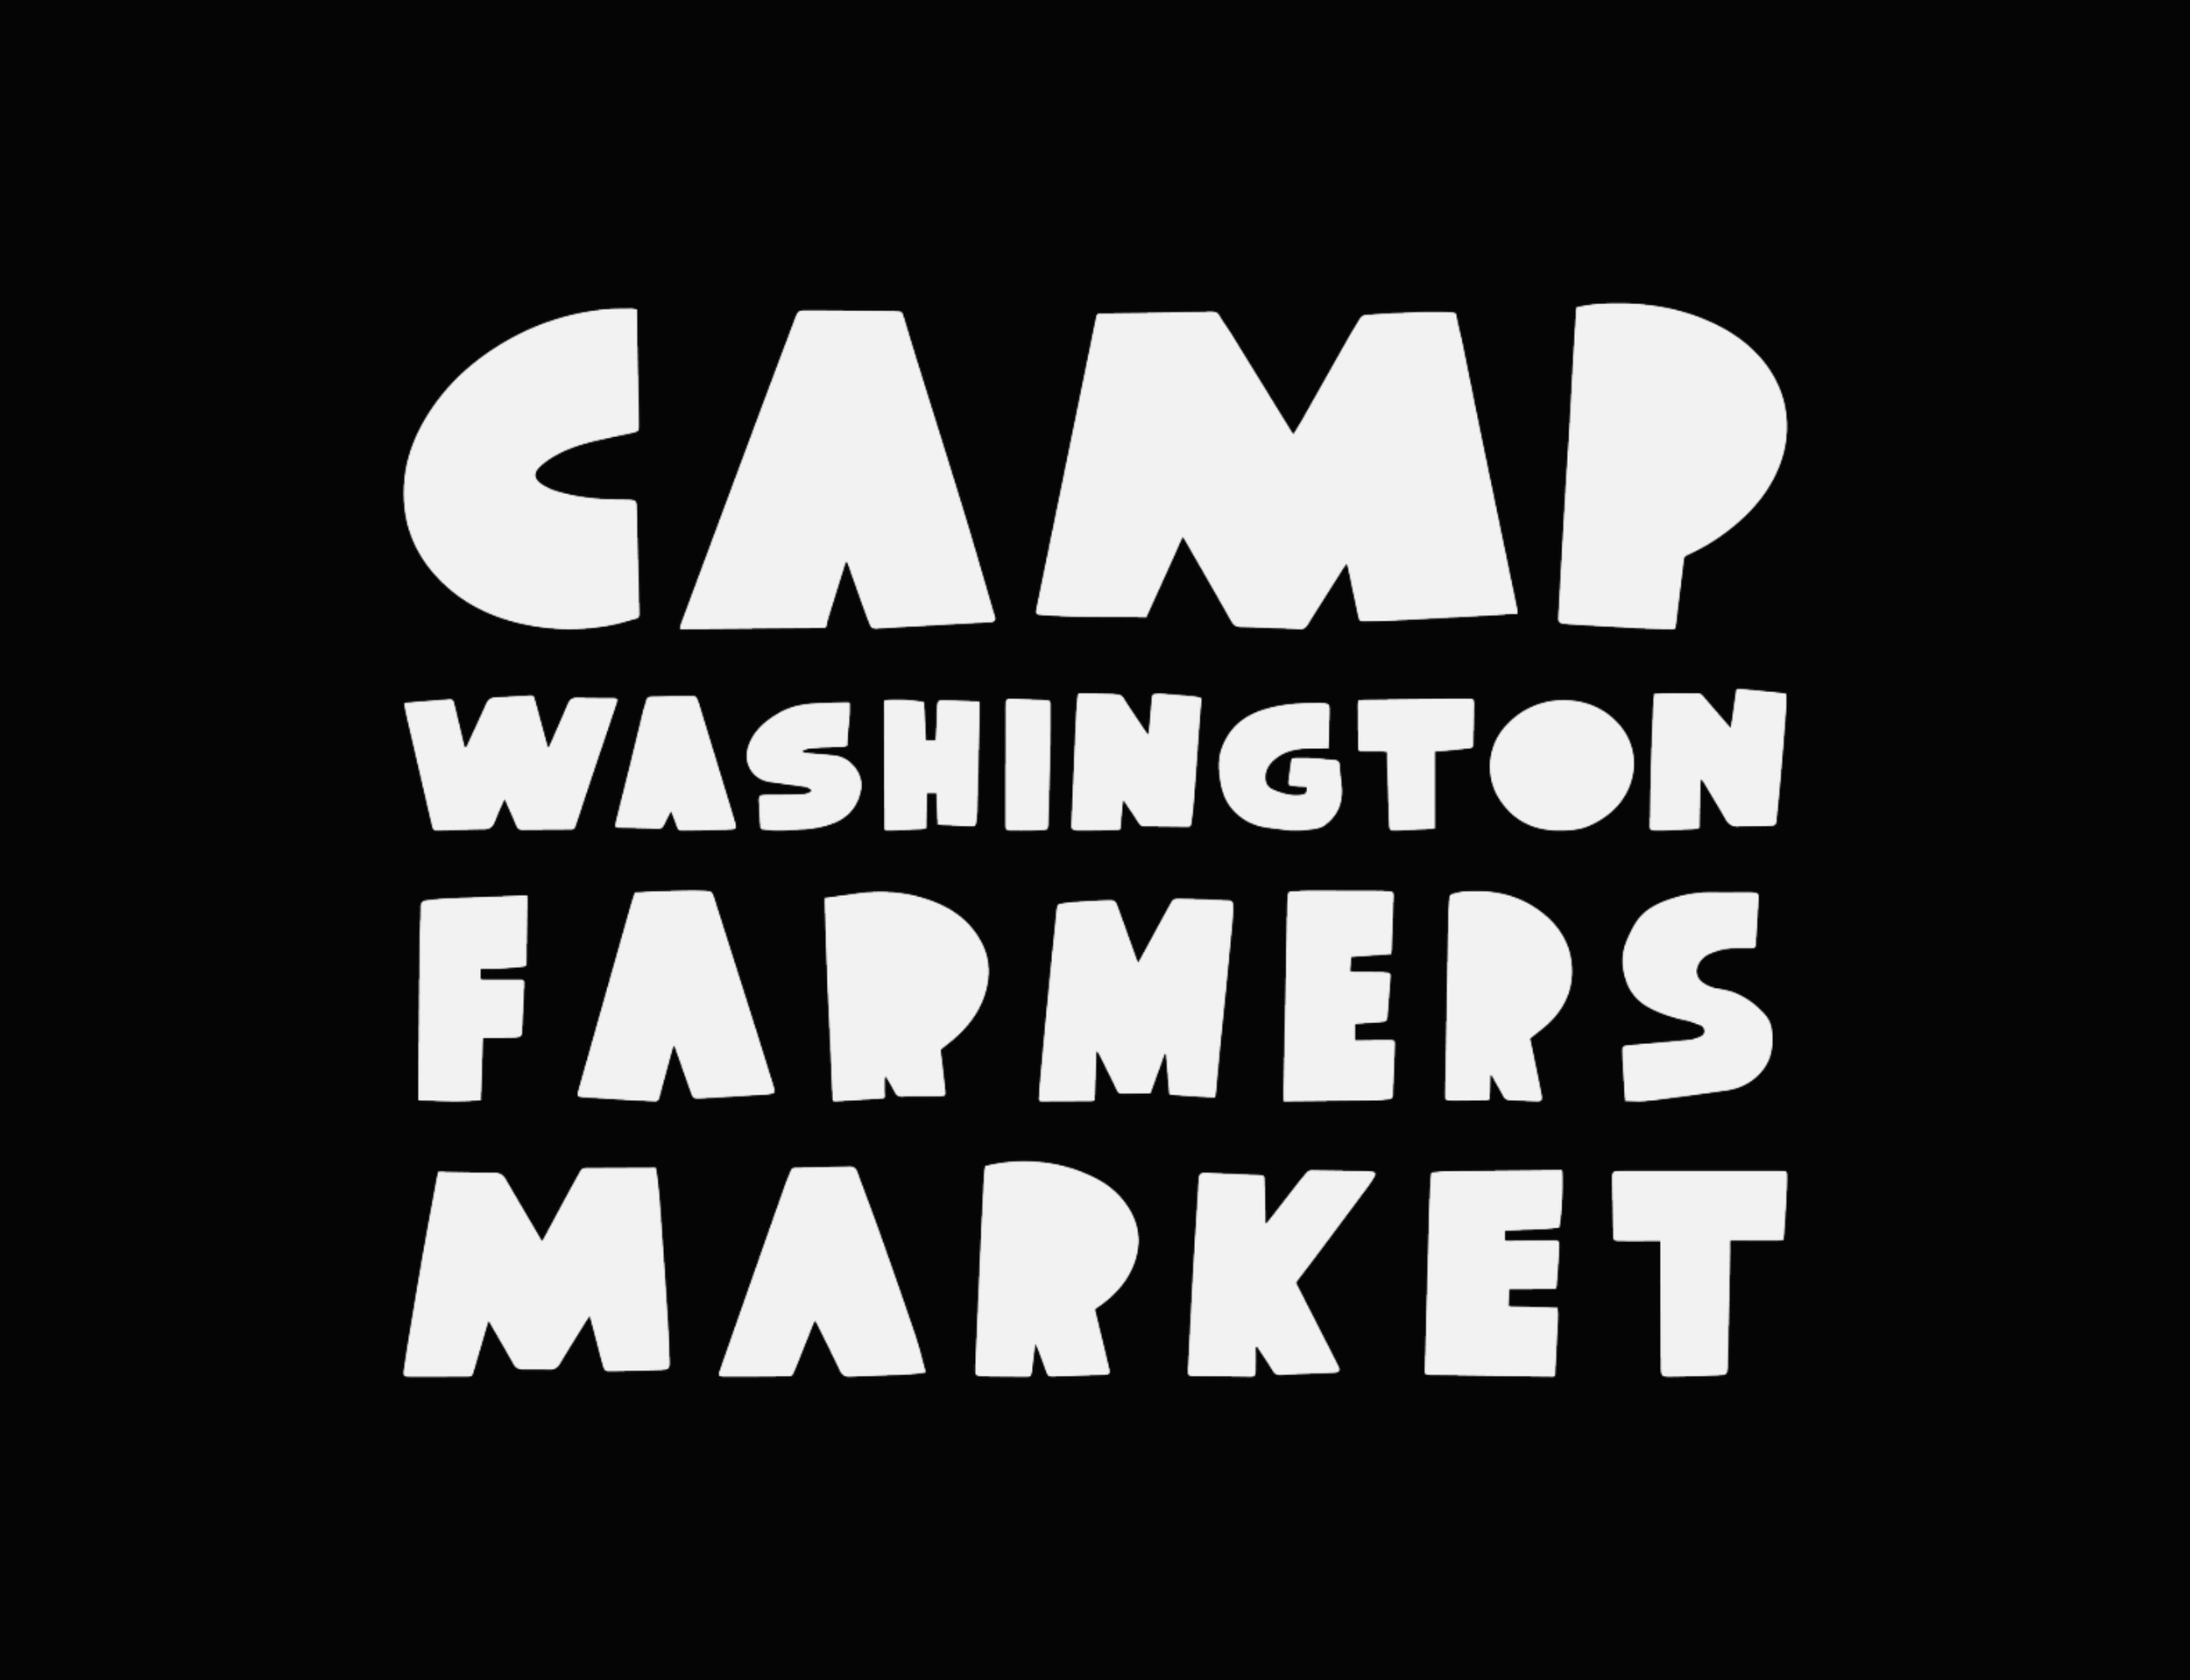 Camp Washington Farmers Market